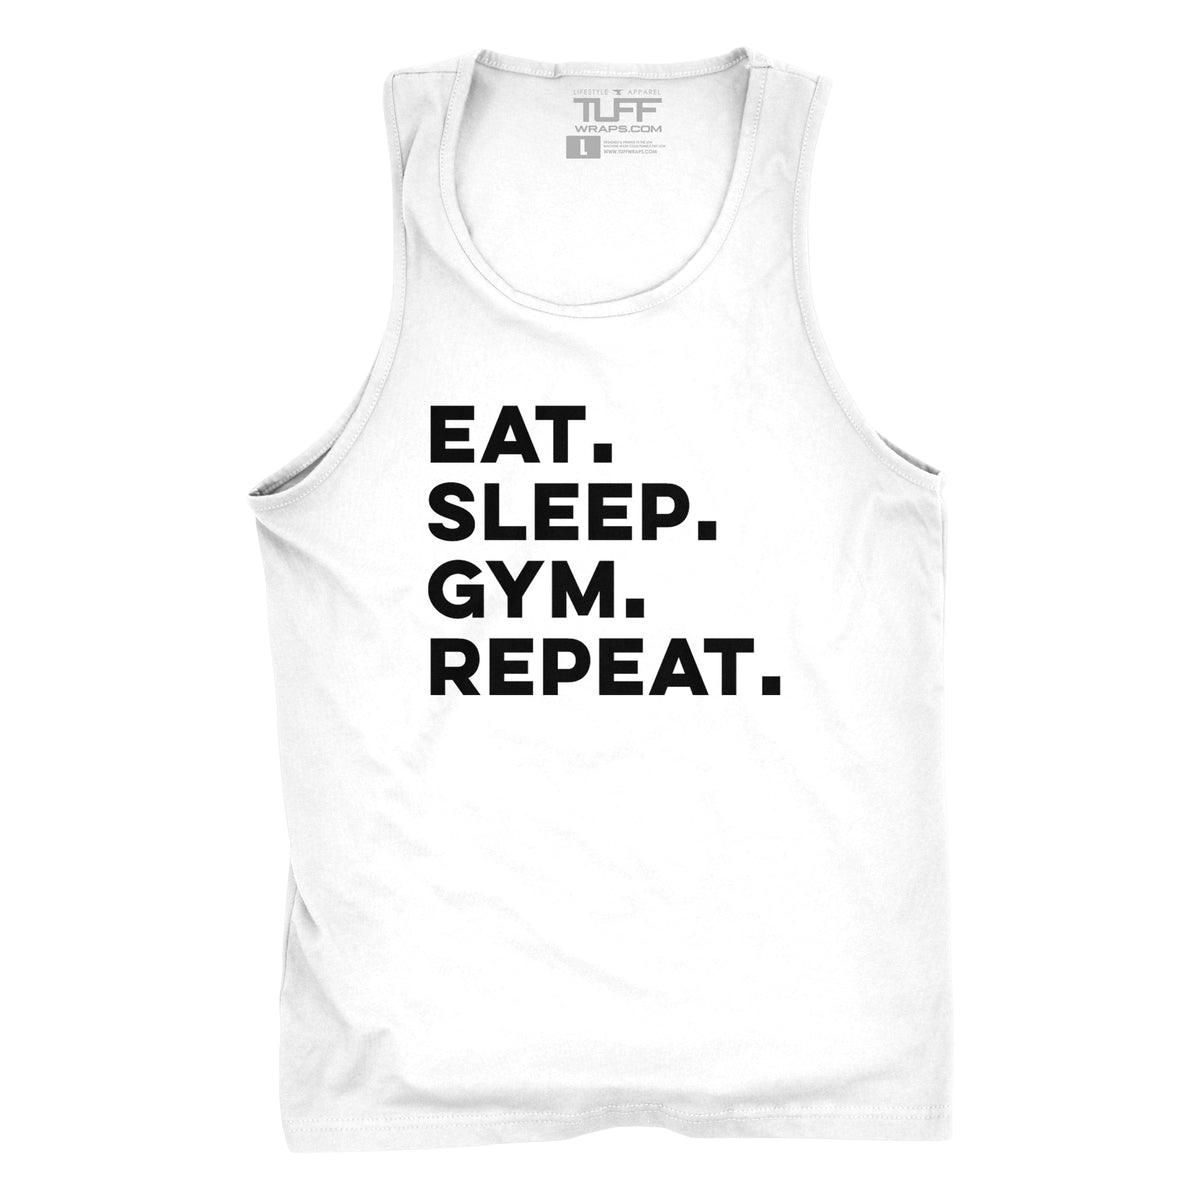 Eat. Sleep. Gym. Repeat. Tank S / White TuffWraps.com